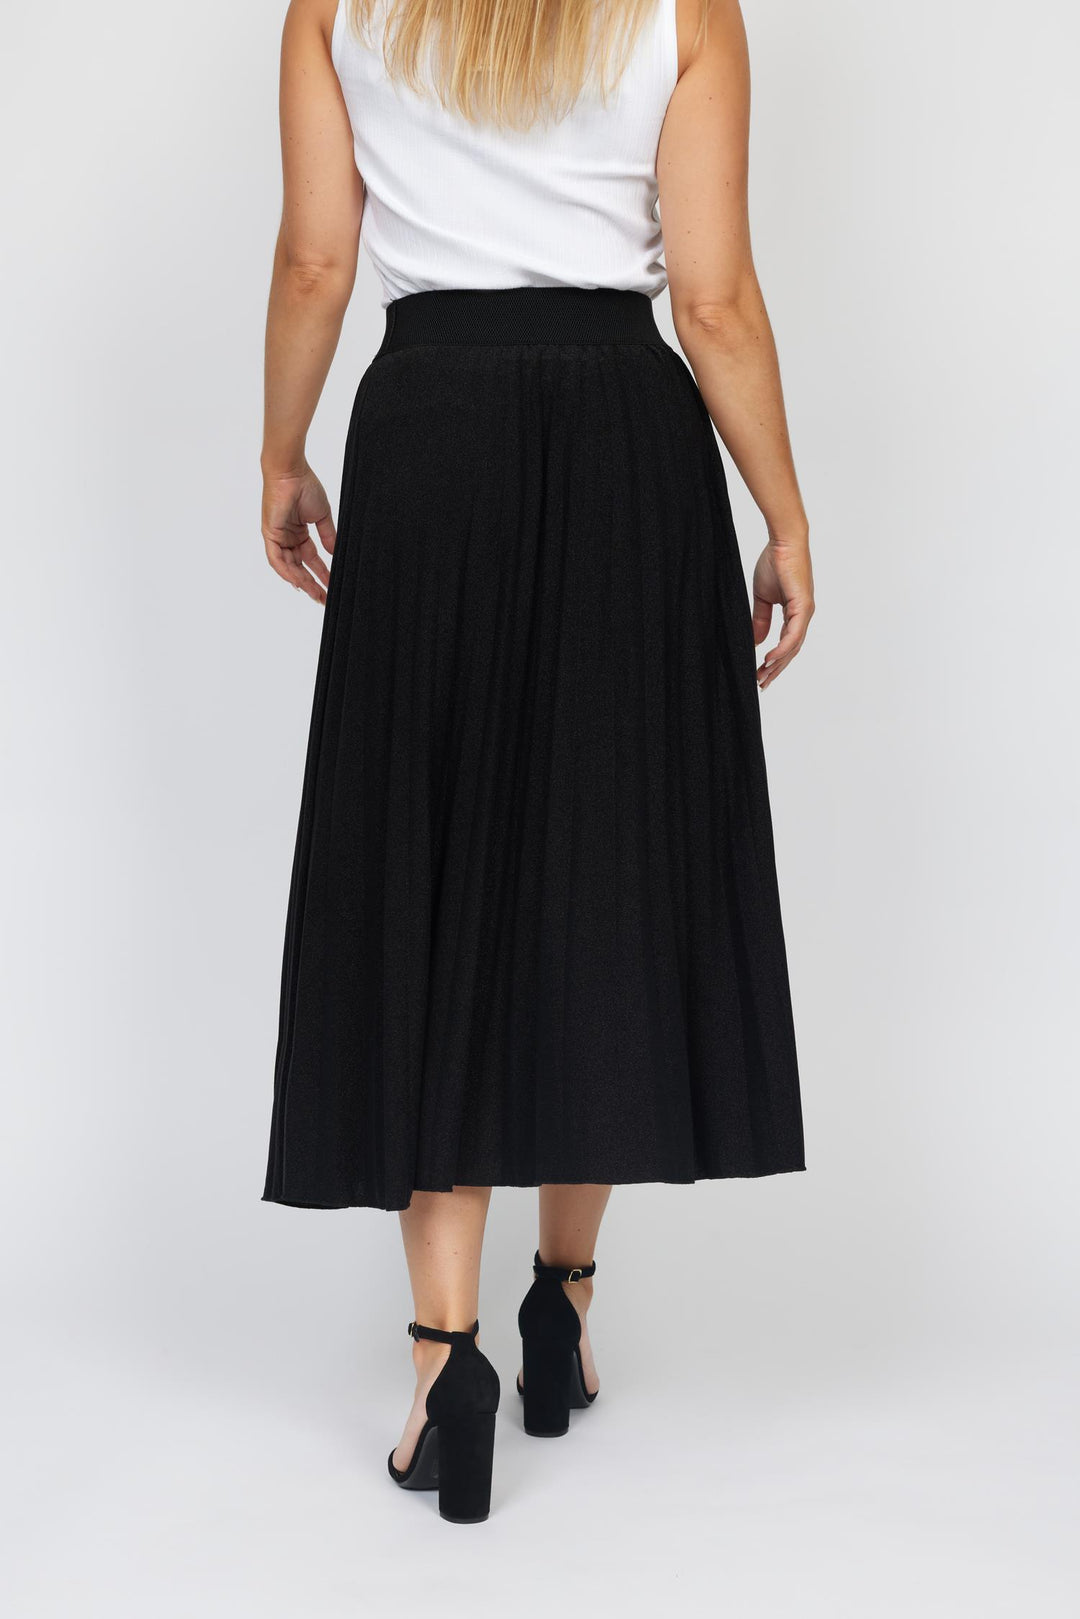 Quala - Skirt